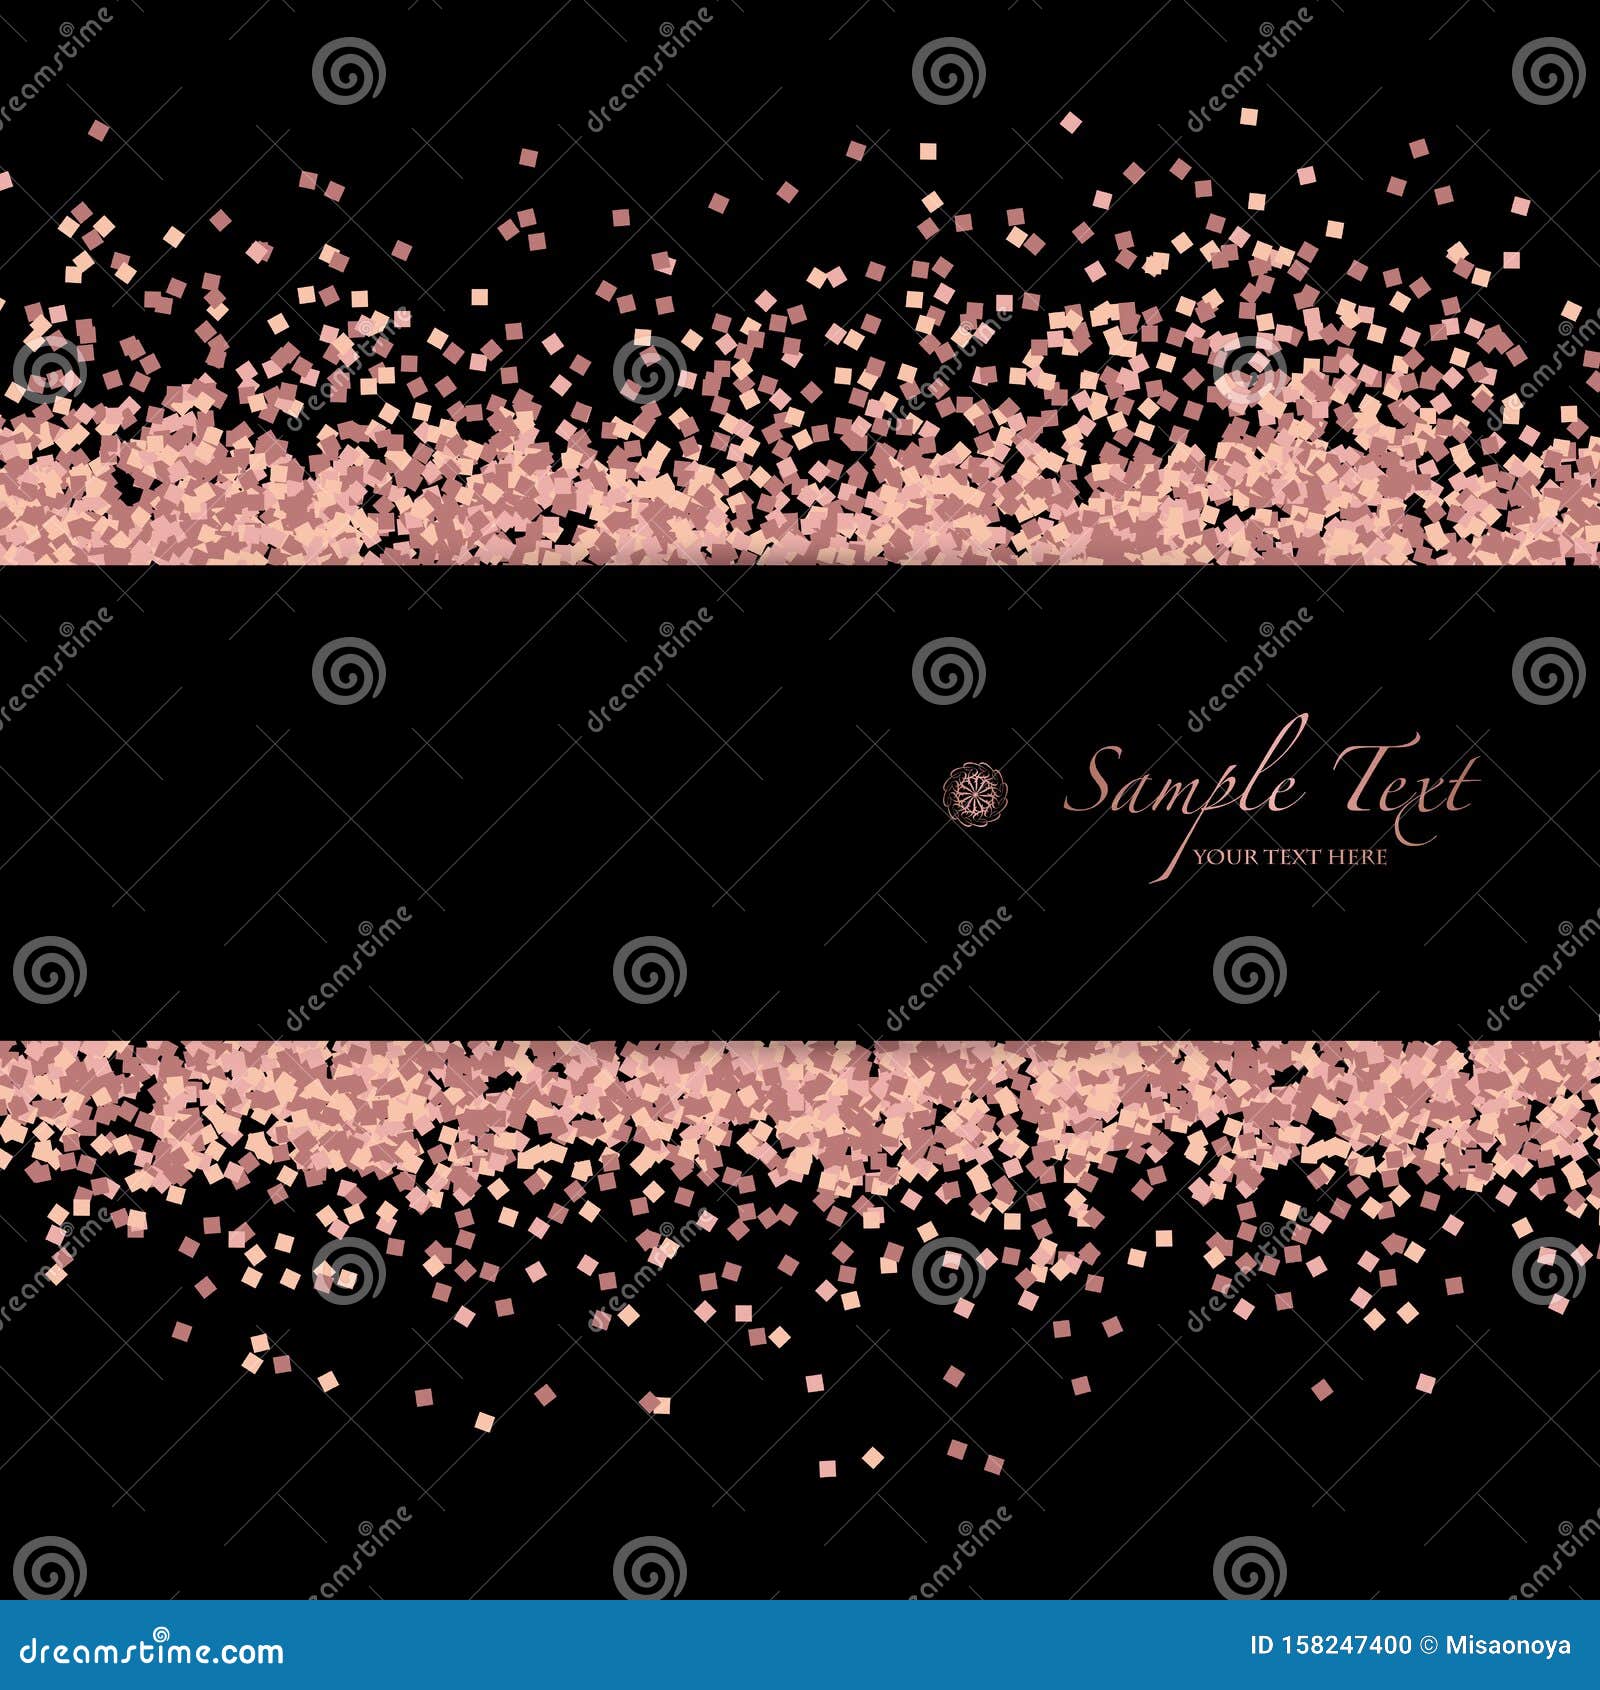 Pink Glitter Material Scattered Black Background Stock Vector -  Illustration of banner, frame: 158247400